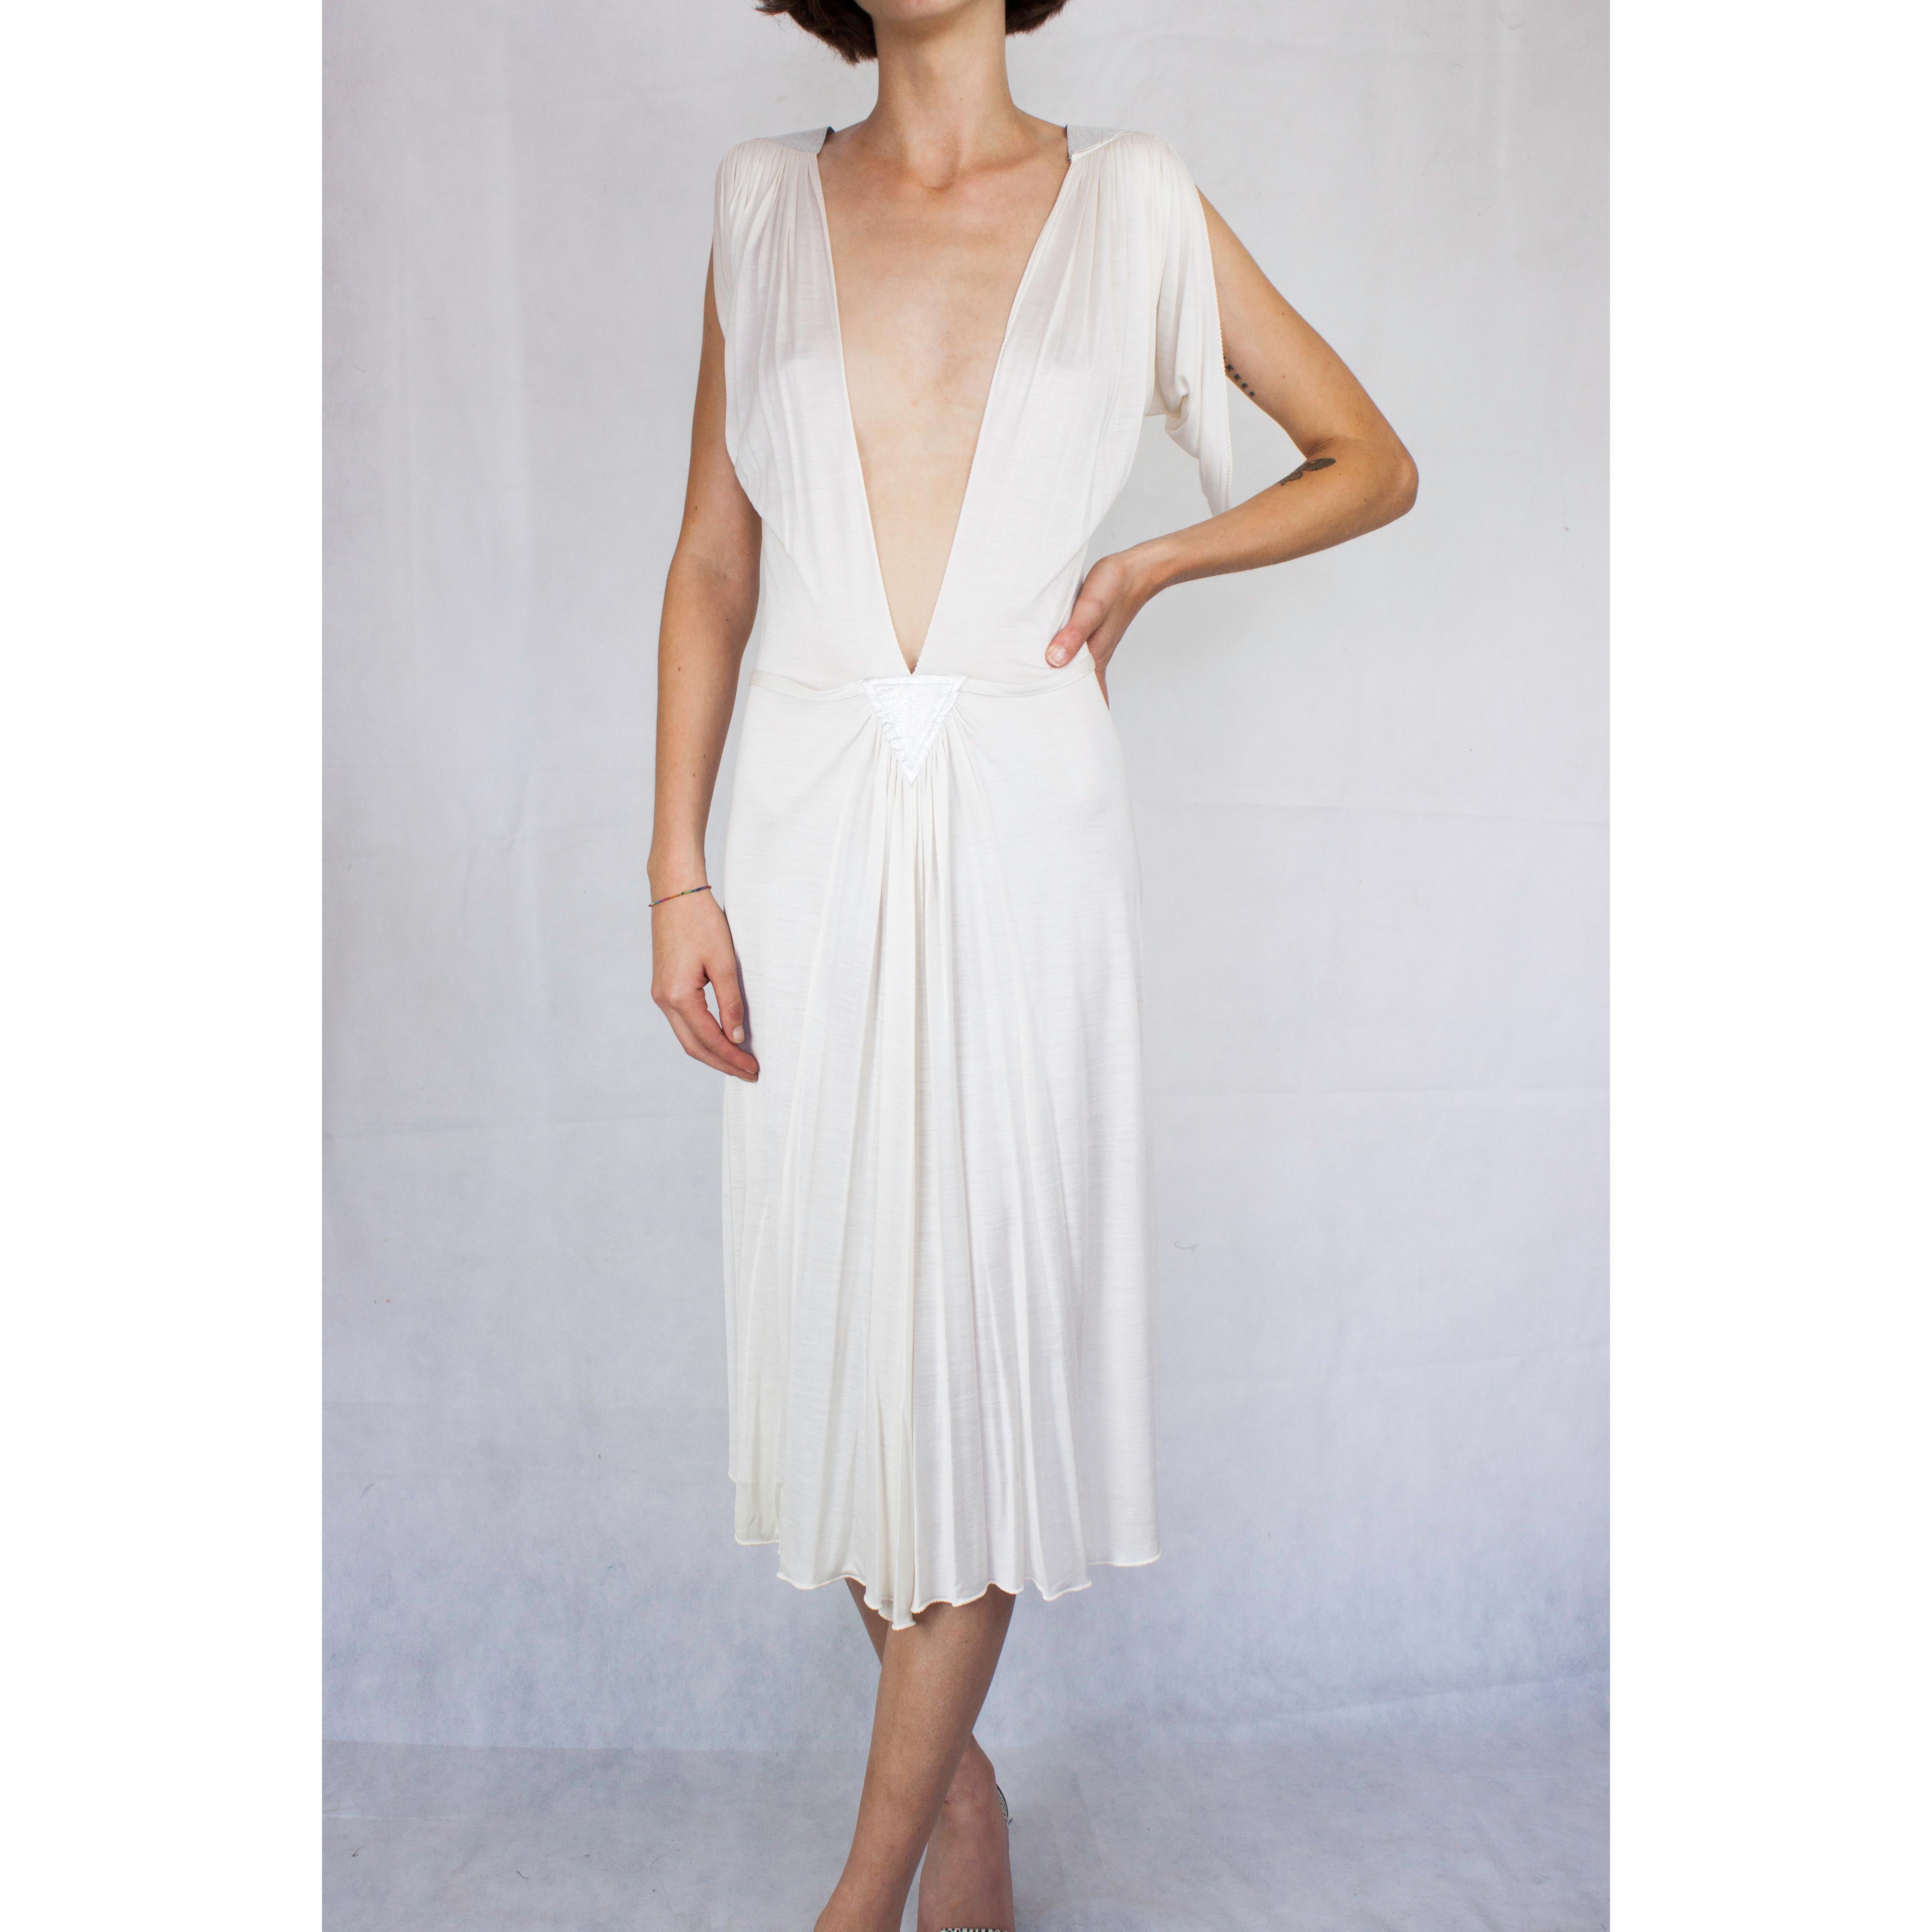 Women's Christian Dior “Studio 54 “ silk dress .circa 1970s